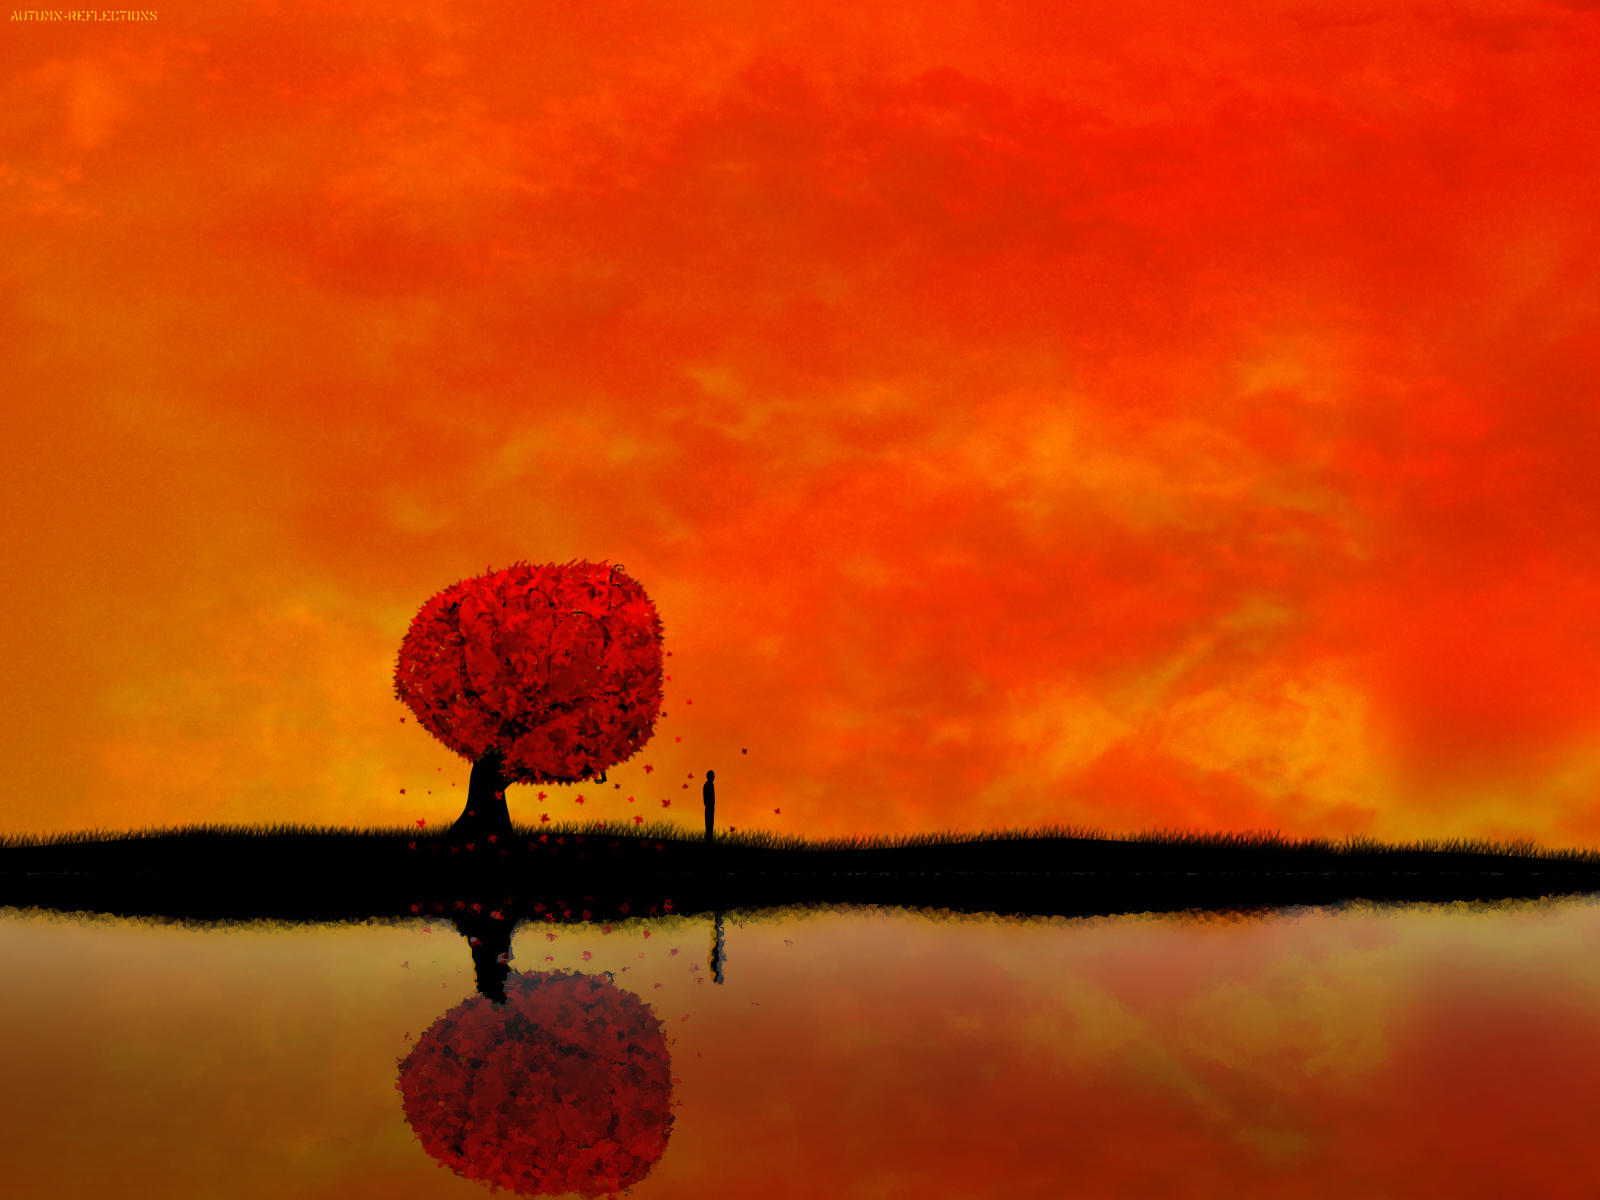 autumn-reflections by daewoniii on DeviantArt